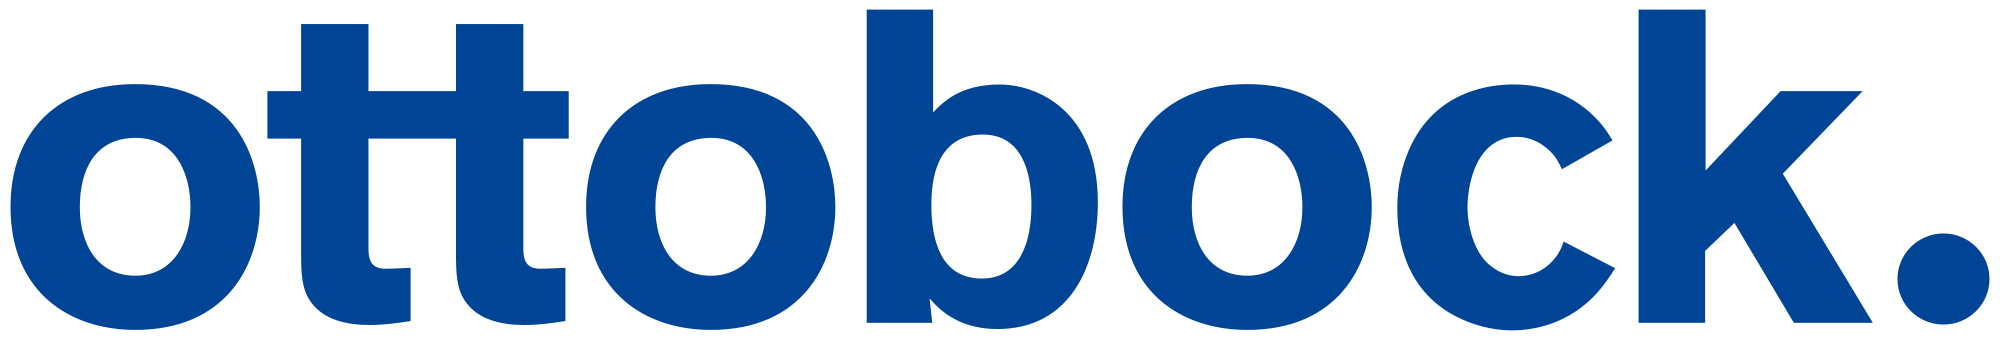 Otto_Bock_logo.svg.png